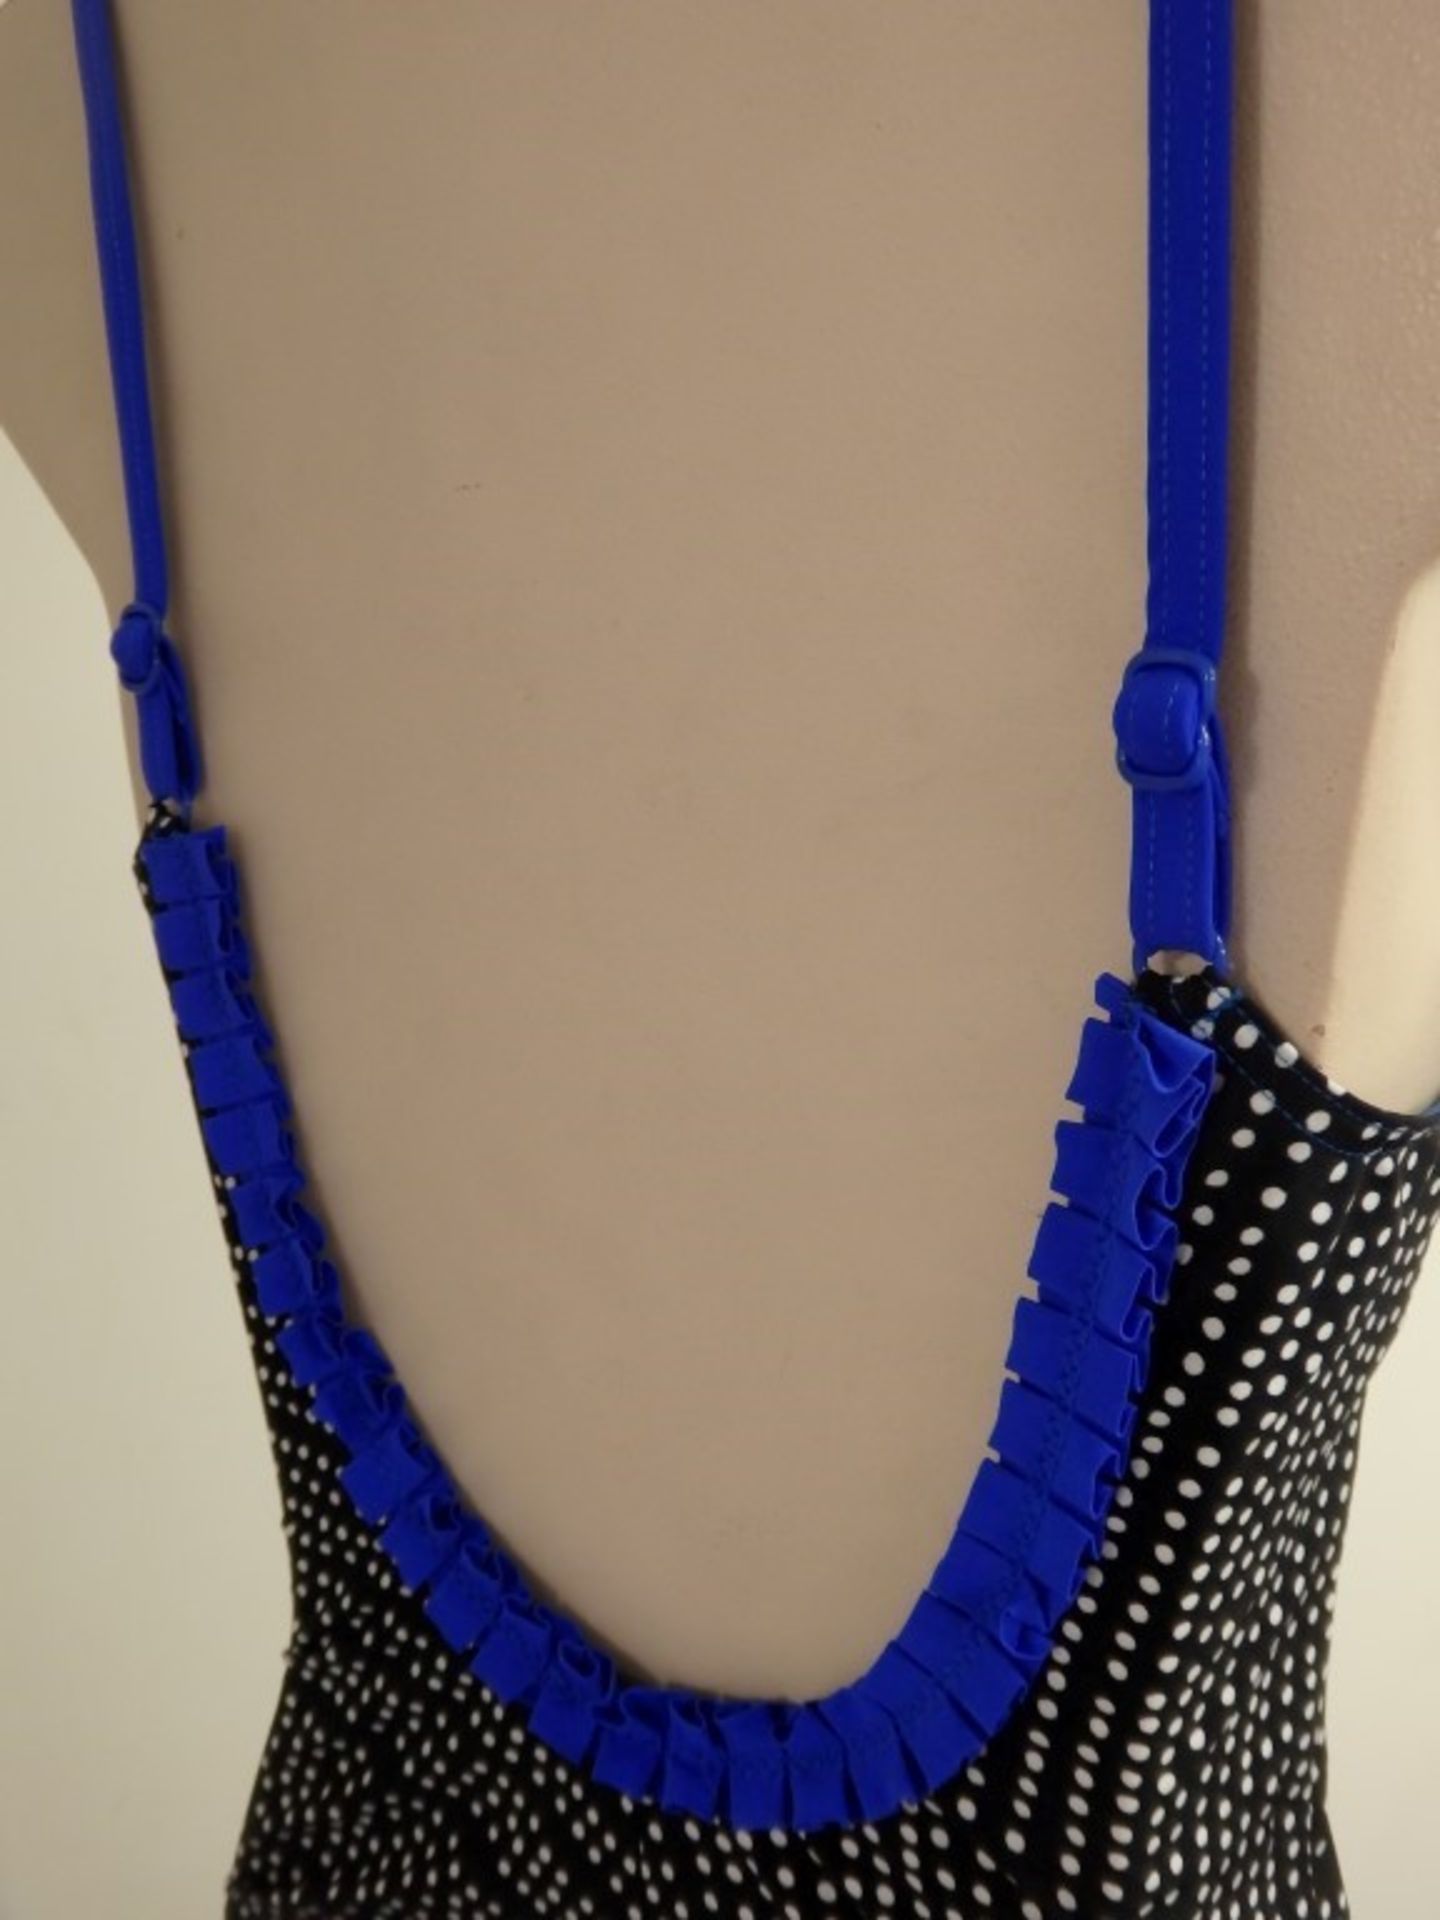 1 x Rasurel - Black Polka dot with royal blue trim & frill Tobago Swimsuit - B21039 - Size 2C - UK - Image 5 of 8